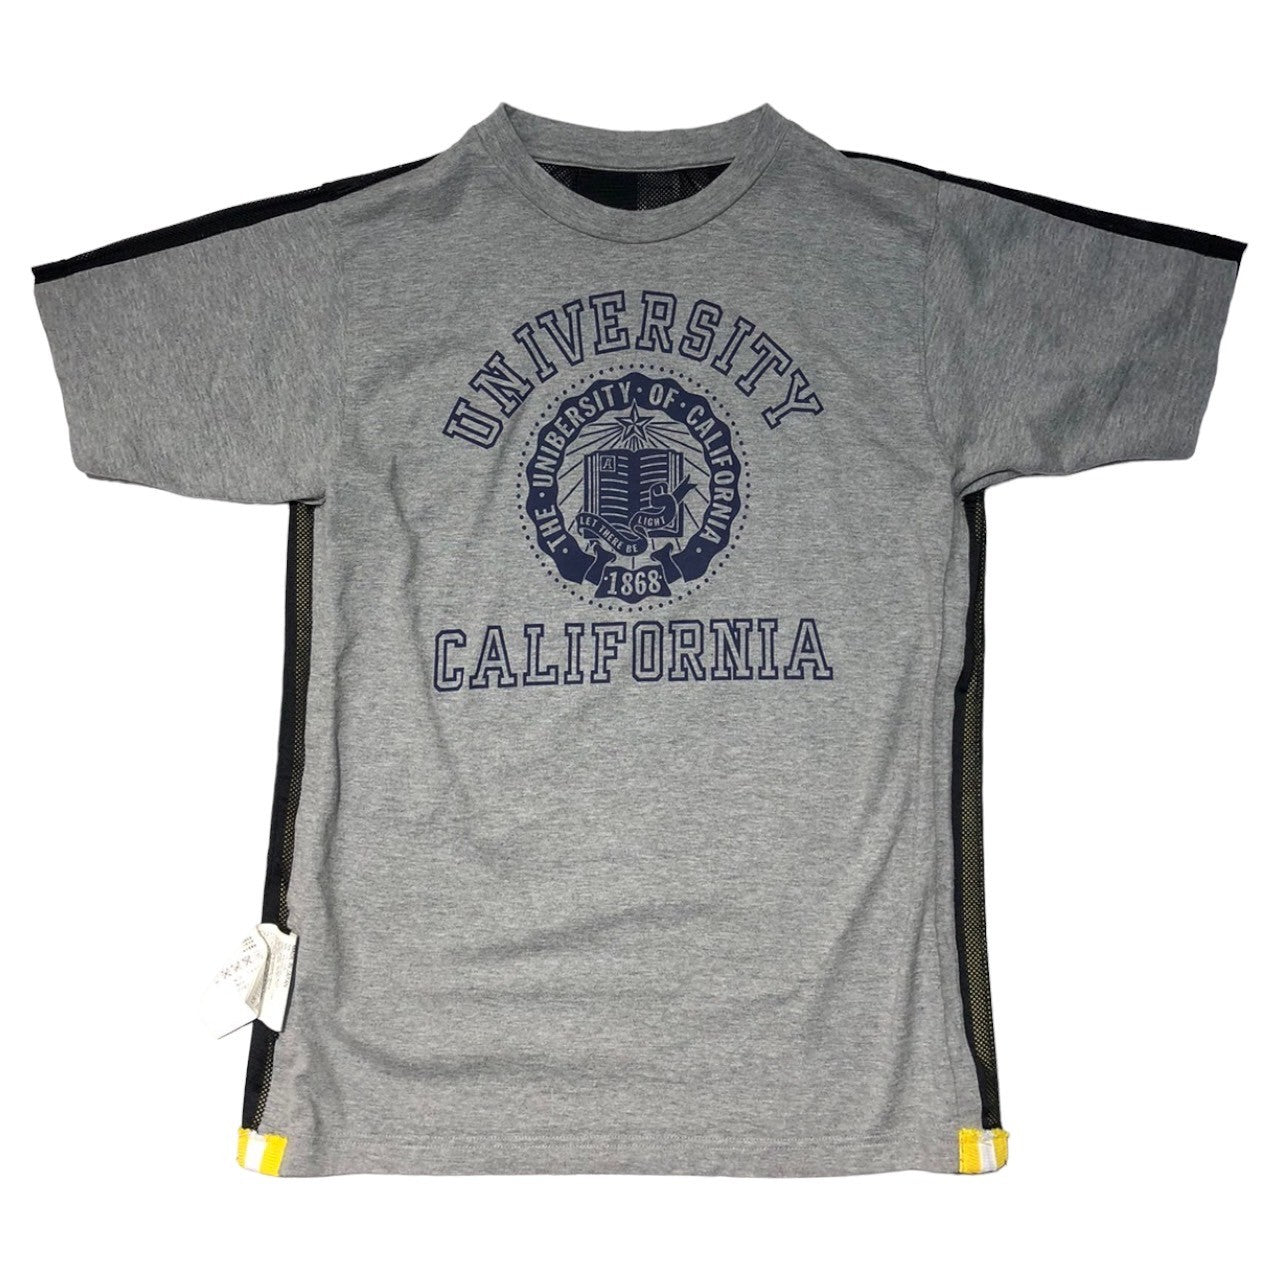 COMME des GARCONS SHIRT(コムデギャルソンシャツ) reversible mesh college T-shirt リバーシブル メッシュ カレッジ ロゴ Tシャツ W12802 M グレー×ブラック×イエロー